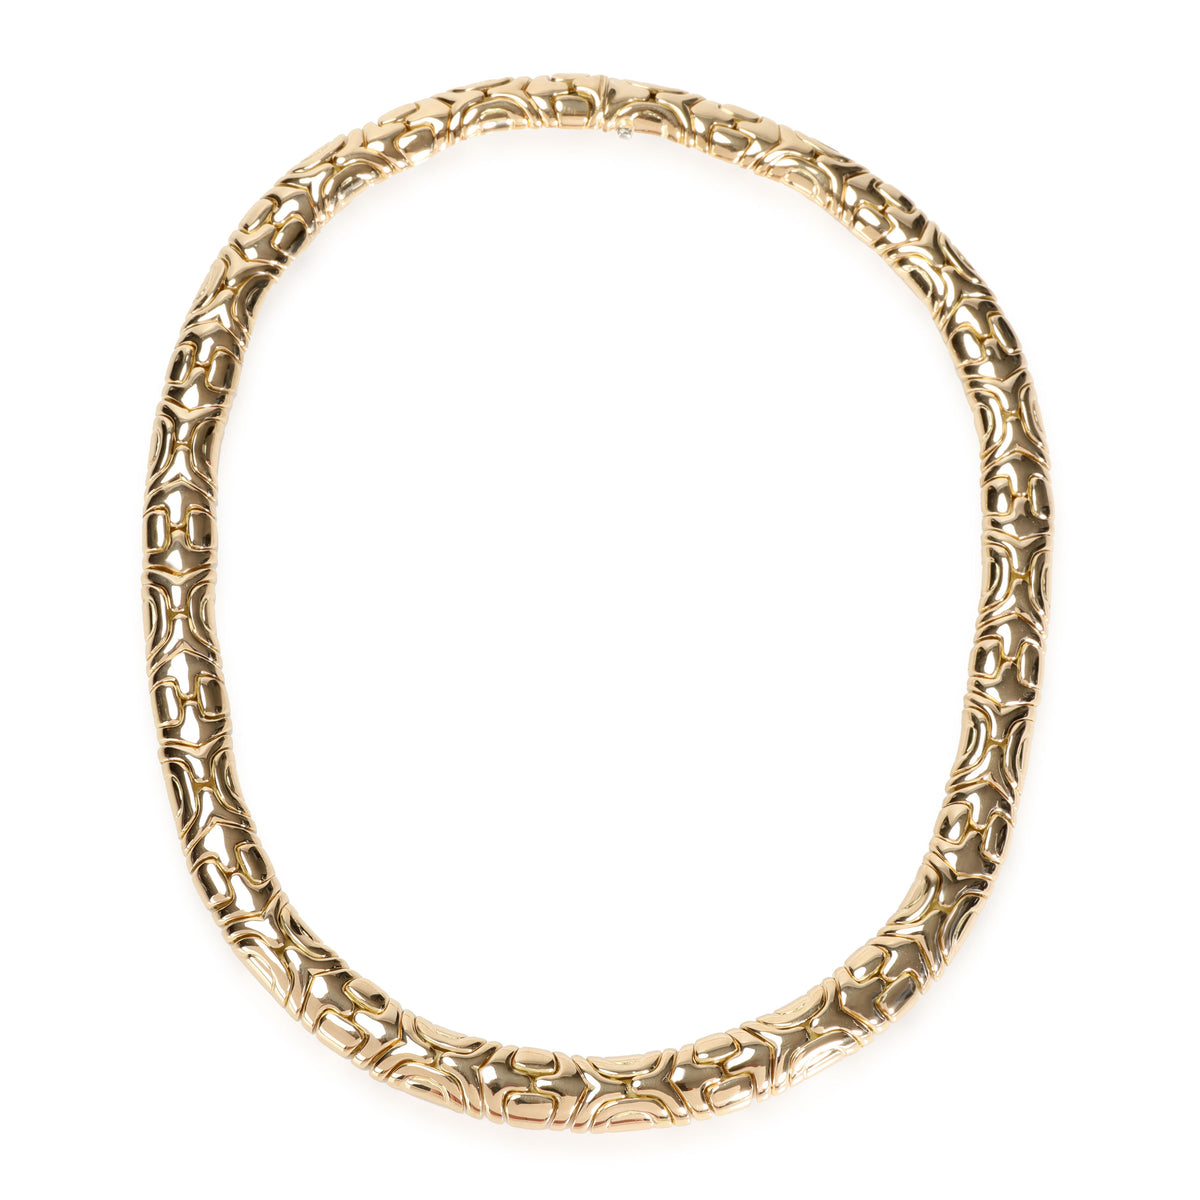 BVLGARI Alveare Choker Necklace in 18K Yellow Gold